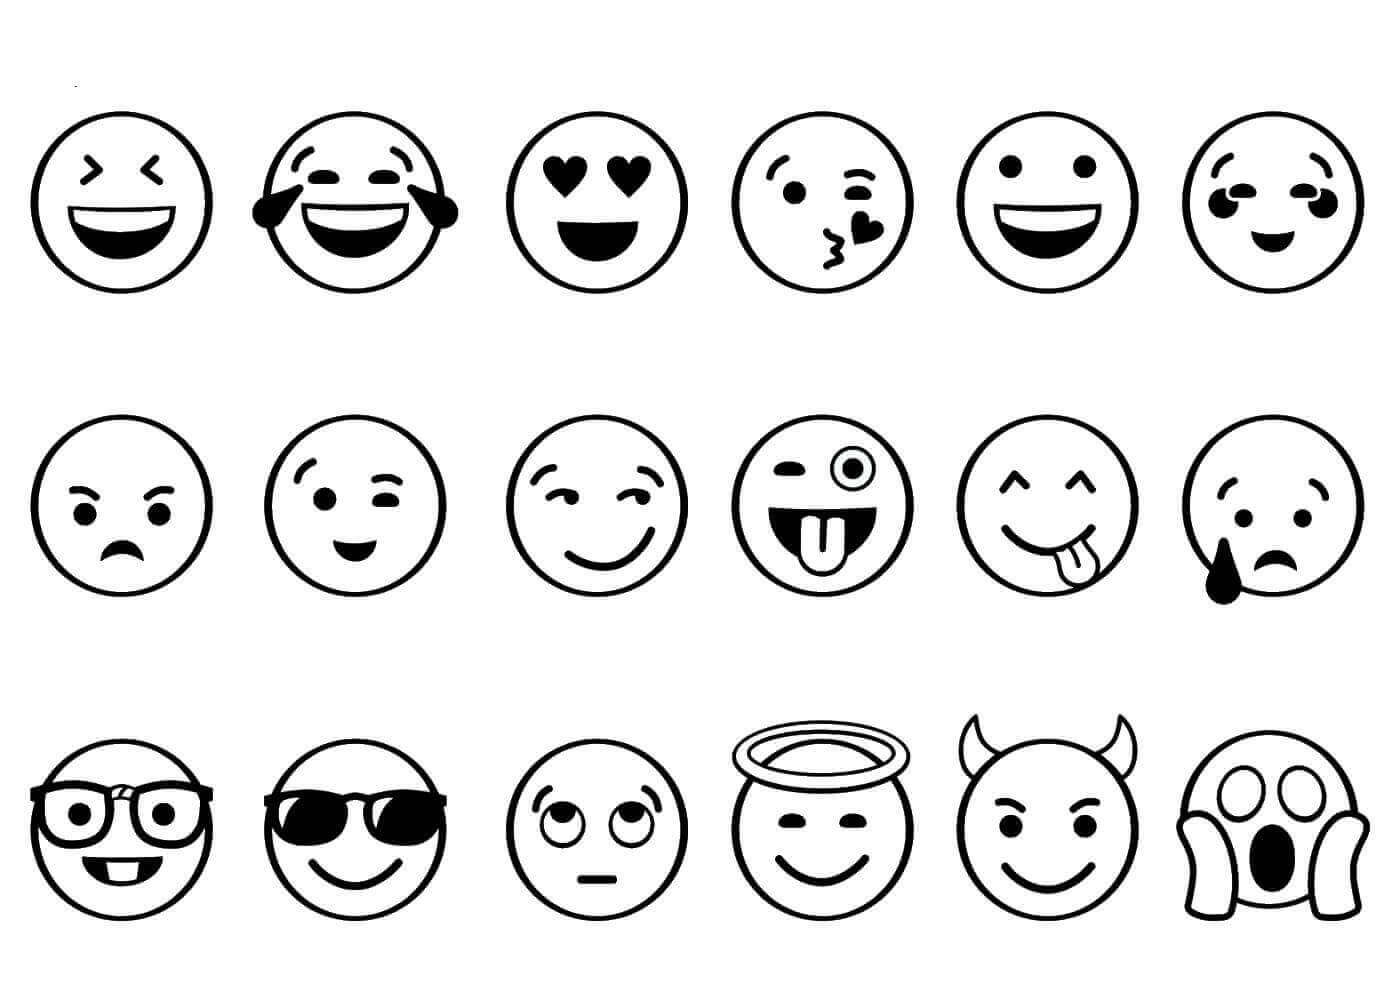 Coloring Pages Of Emojis
 Free Printable Emoji Coloring Pages